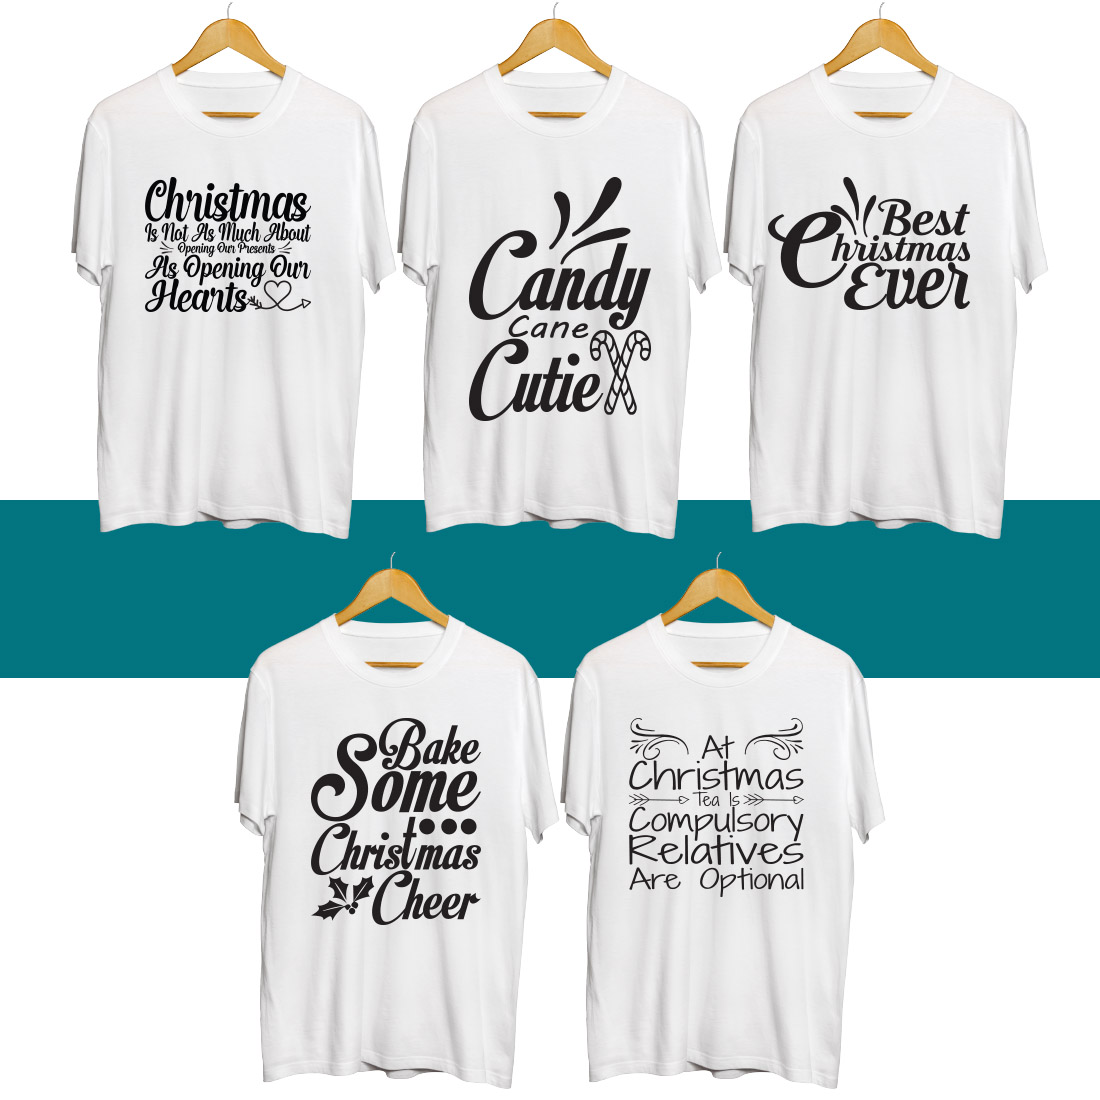 Christmas SVG T Shirt Designs Bundle cover image.